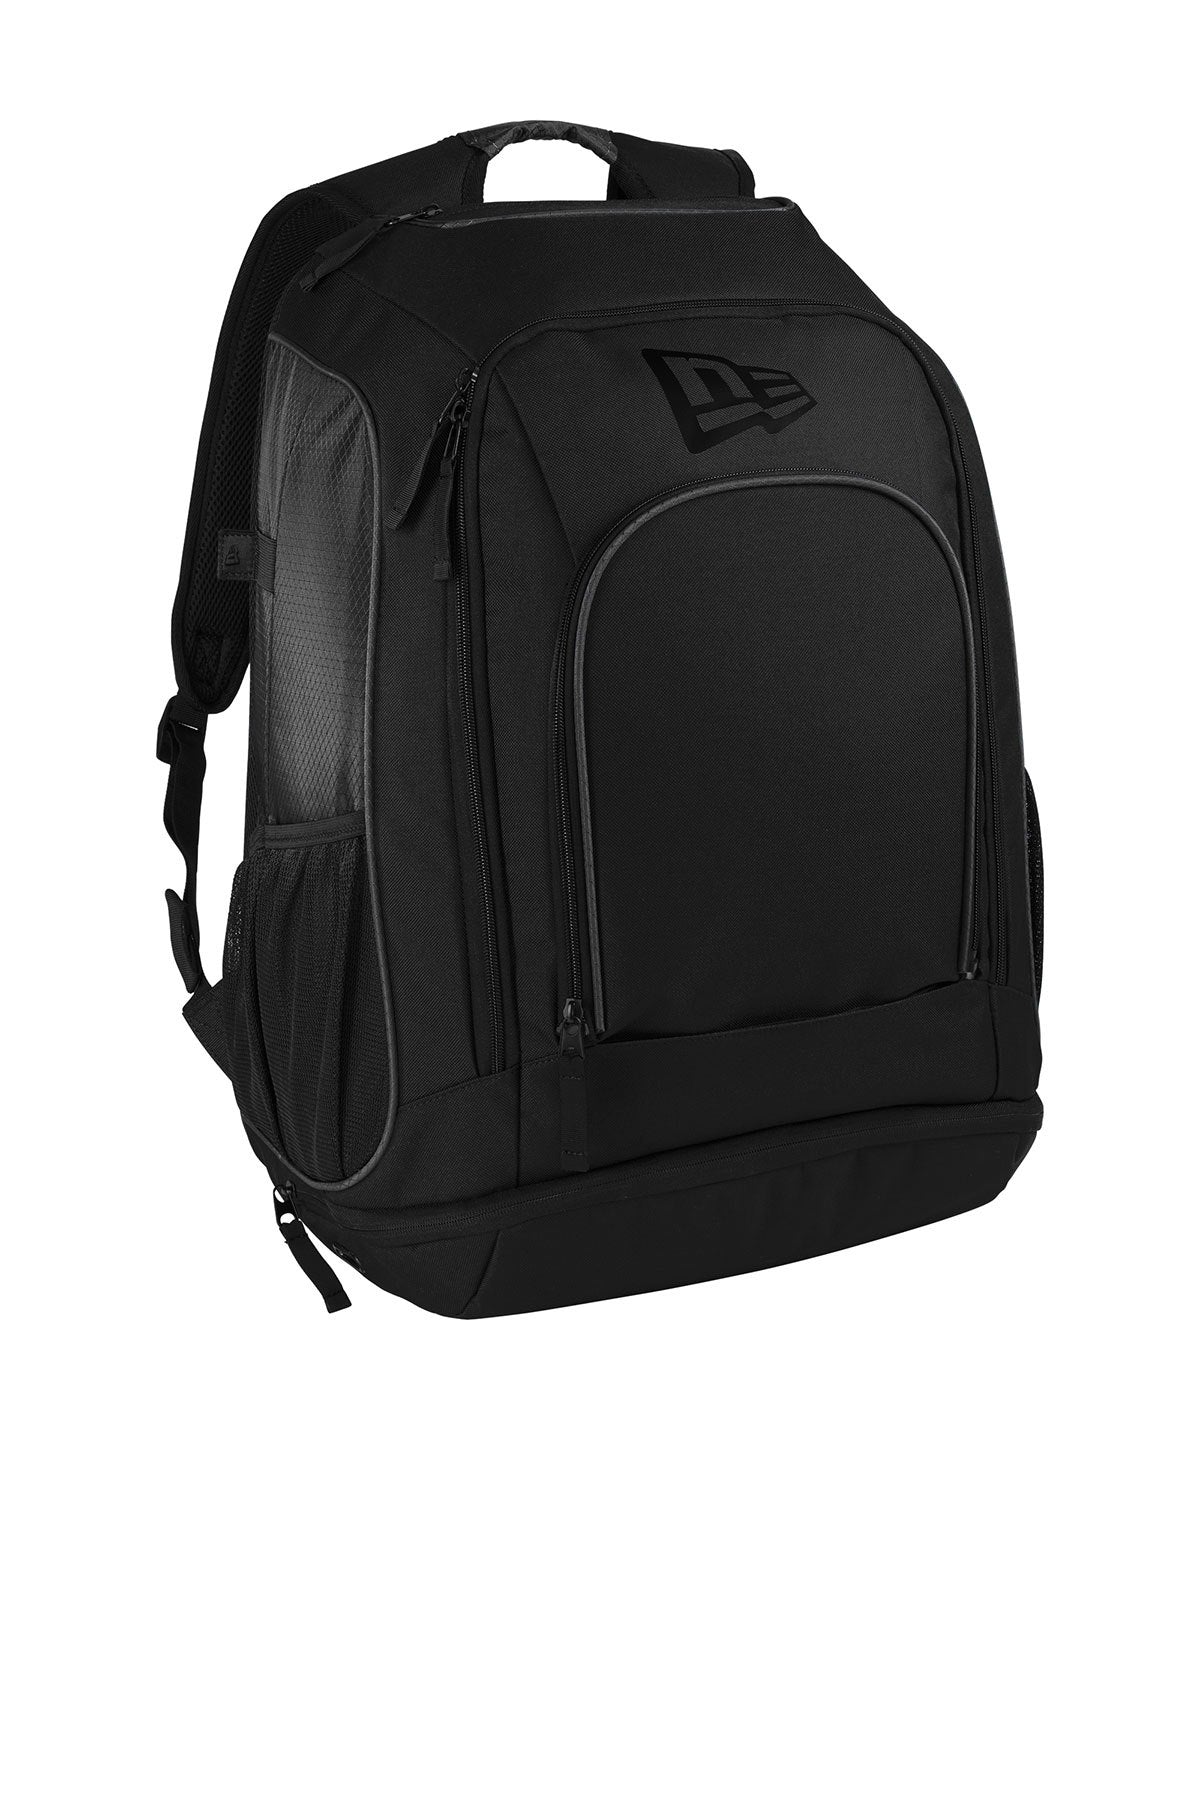 New Era Shutout Custom Backpacks, Graphite Black